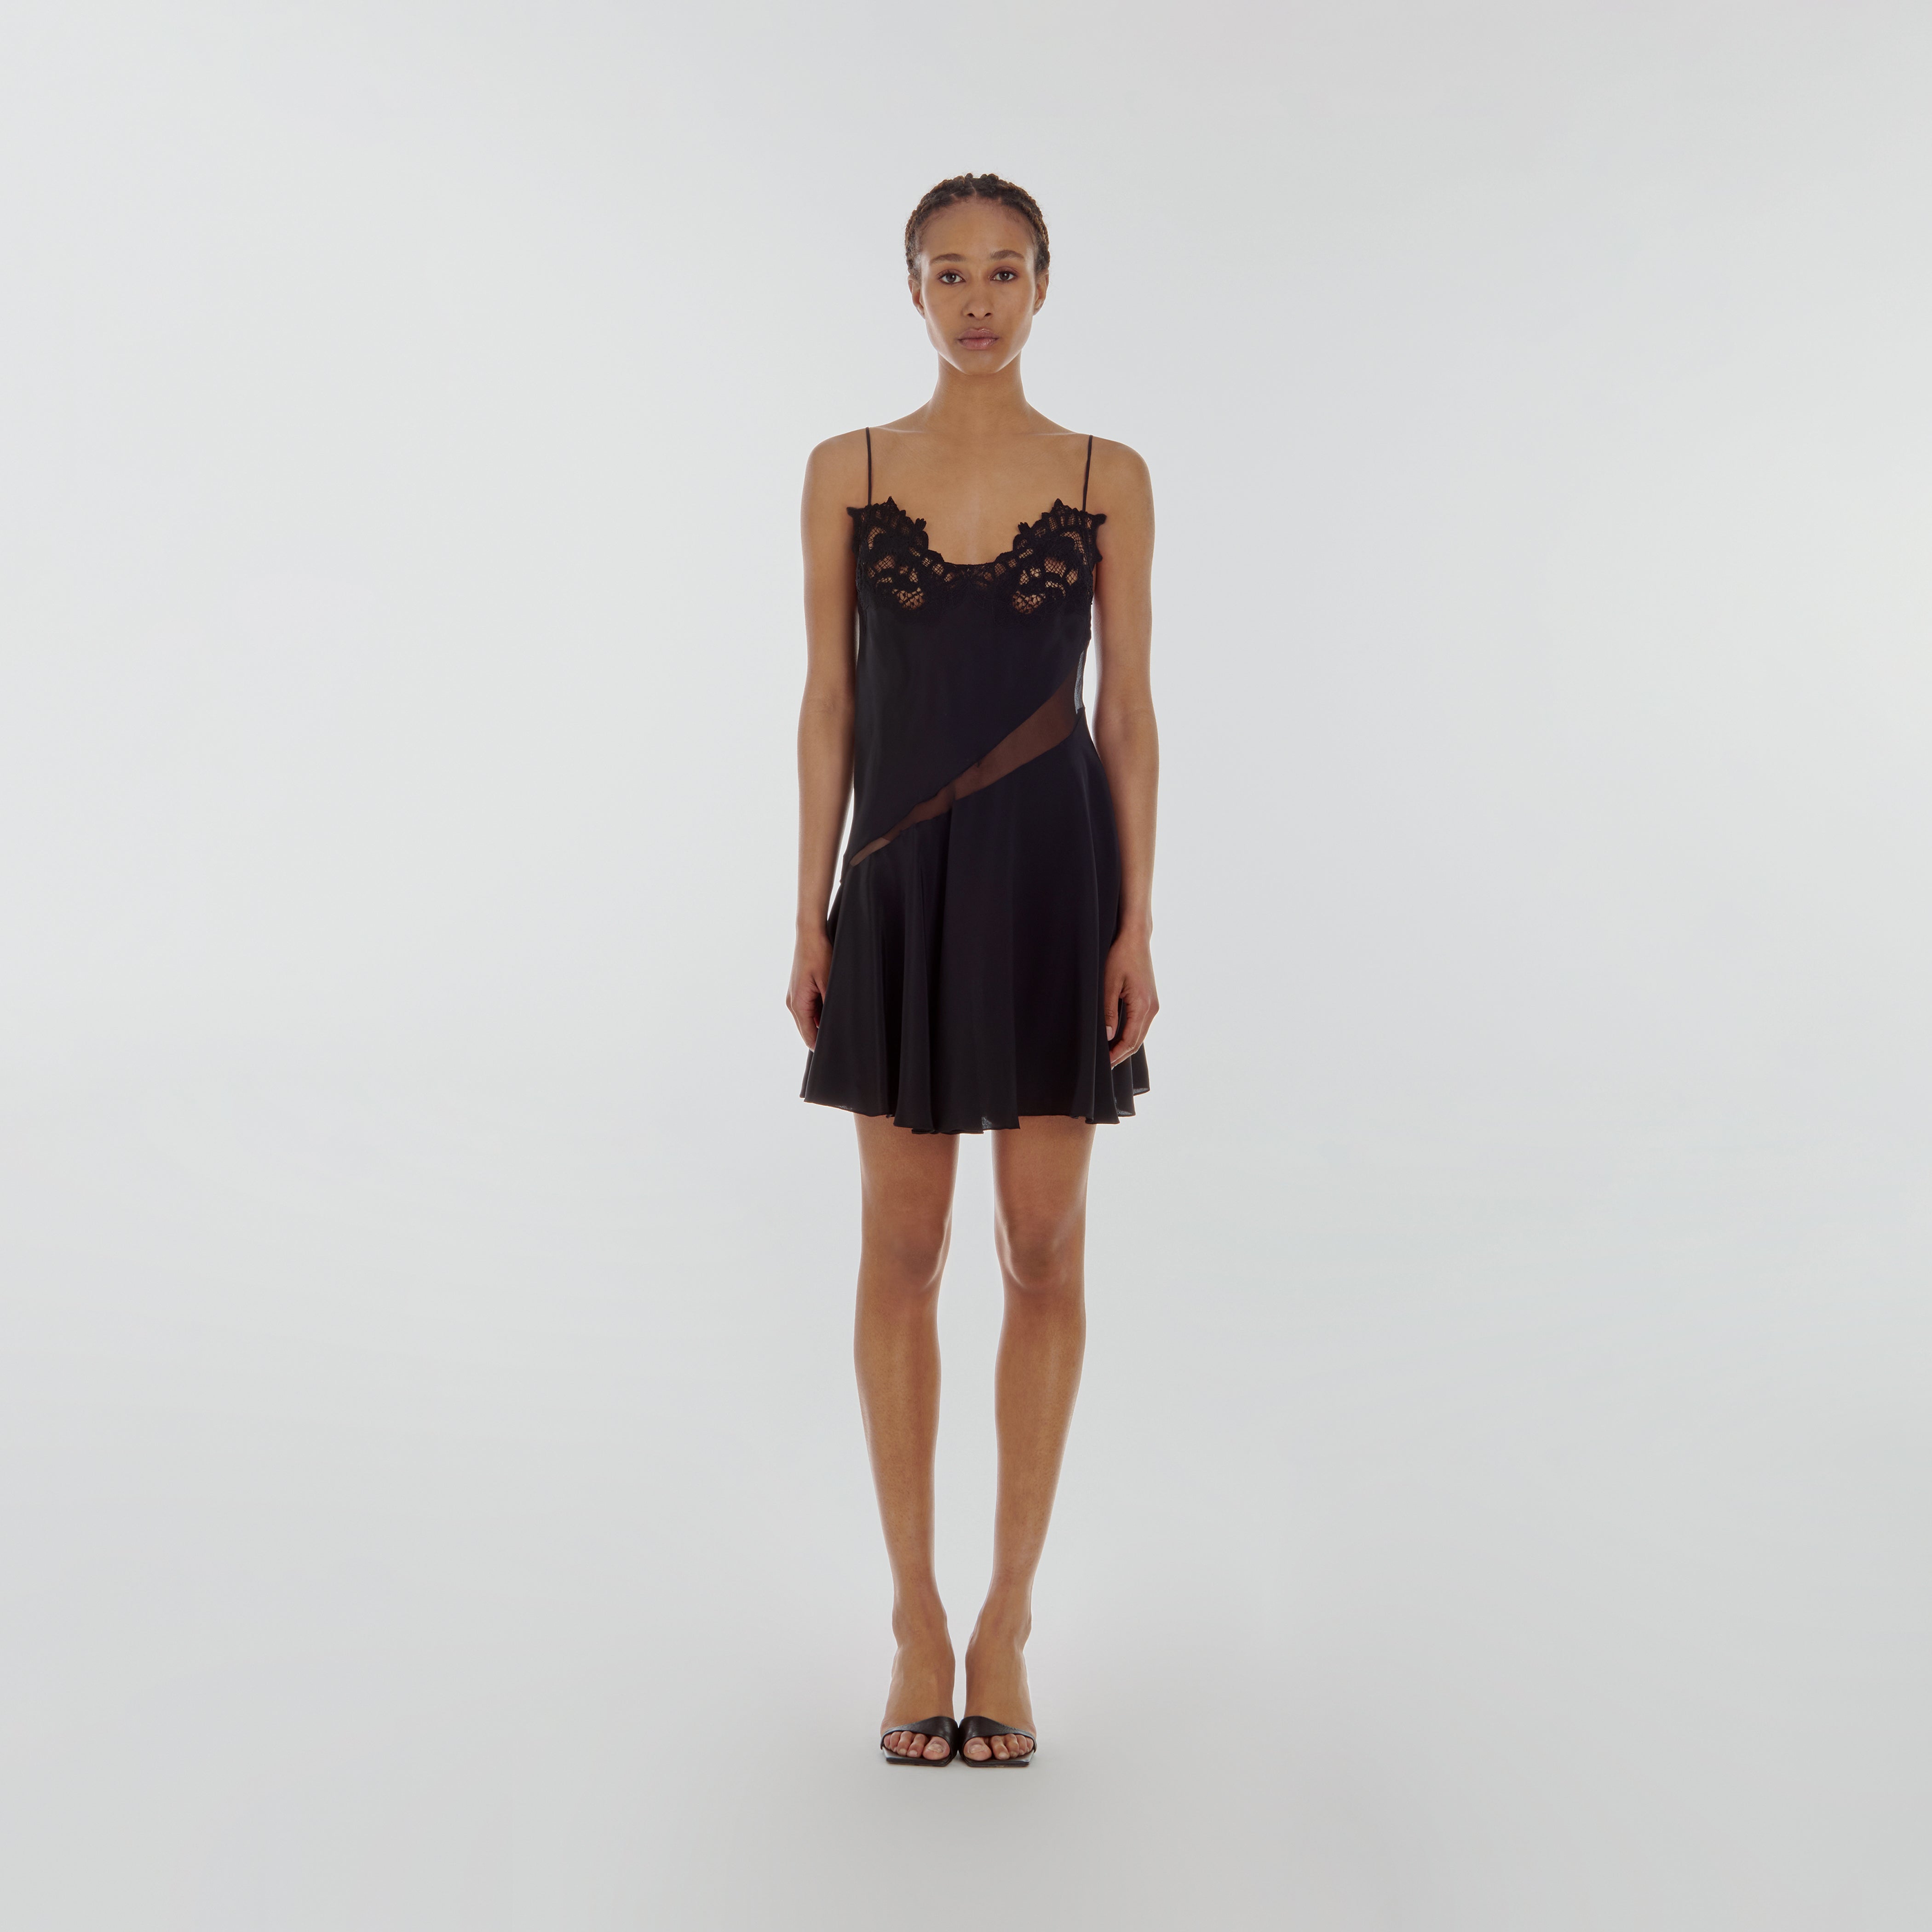 Celestial Dress in black | Lara Chamandi